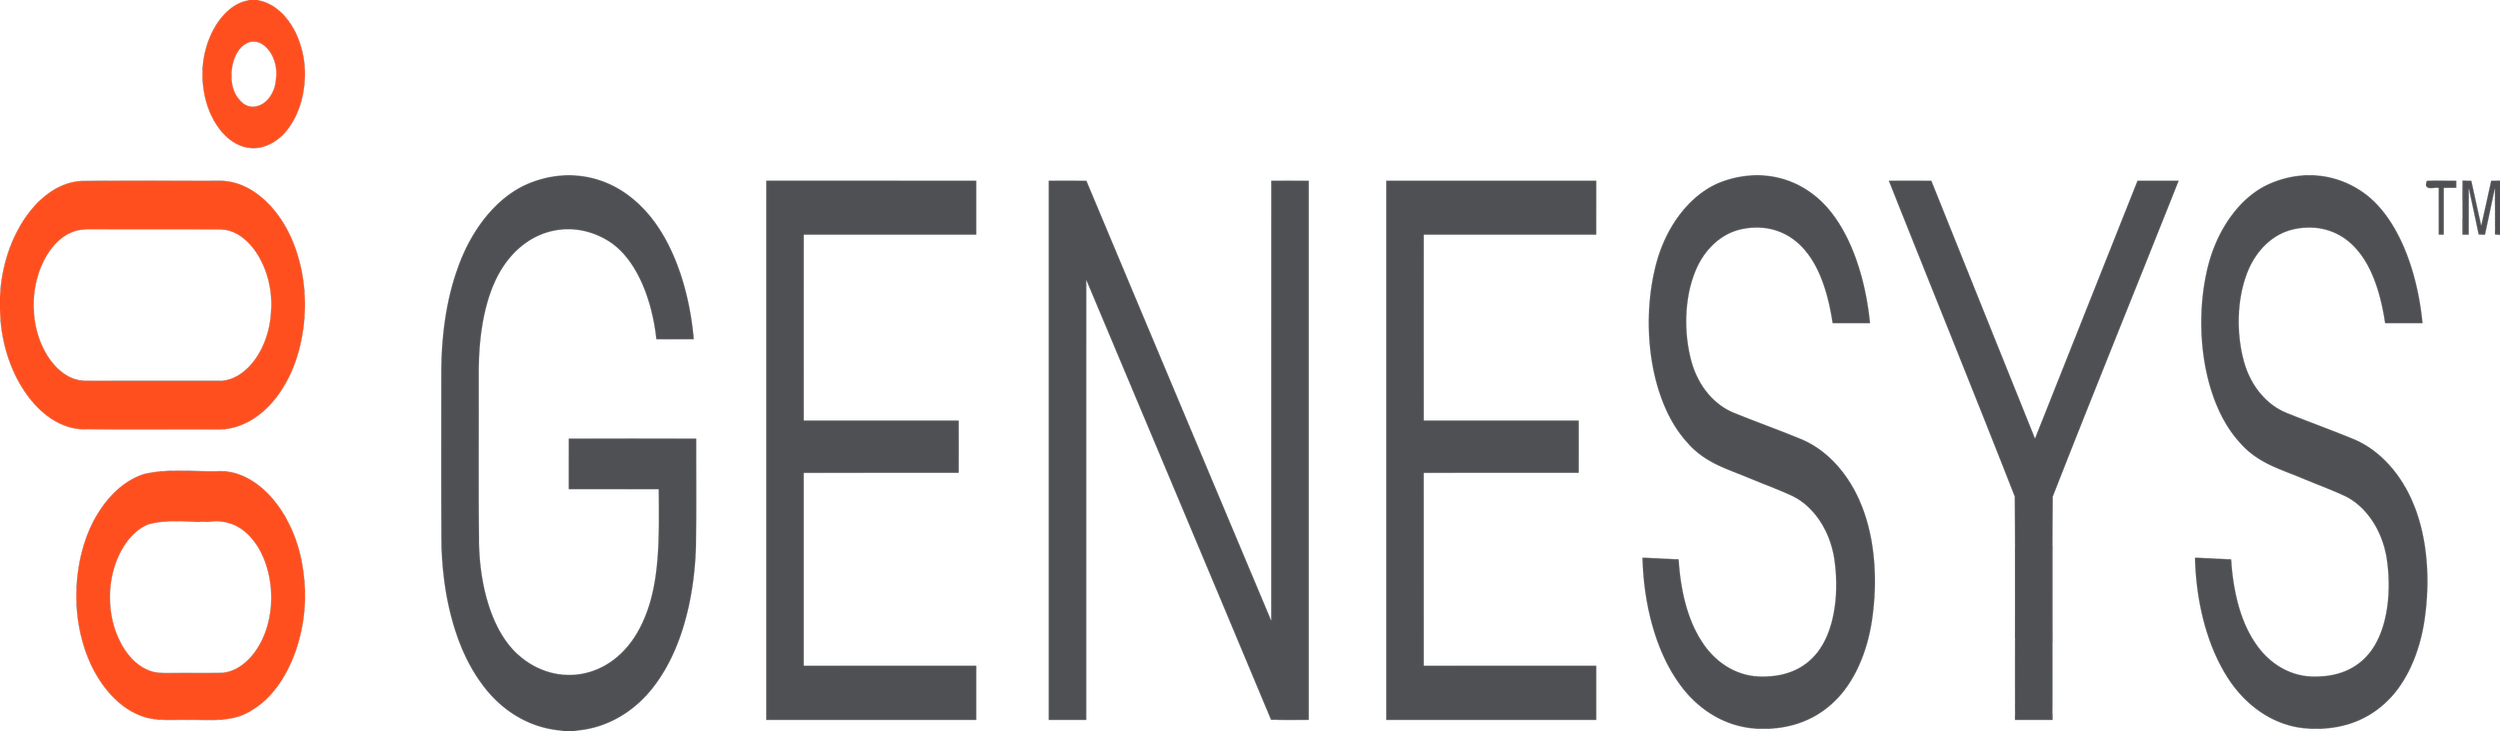 Genesys_Logo.png